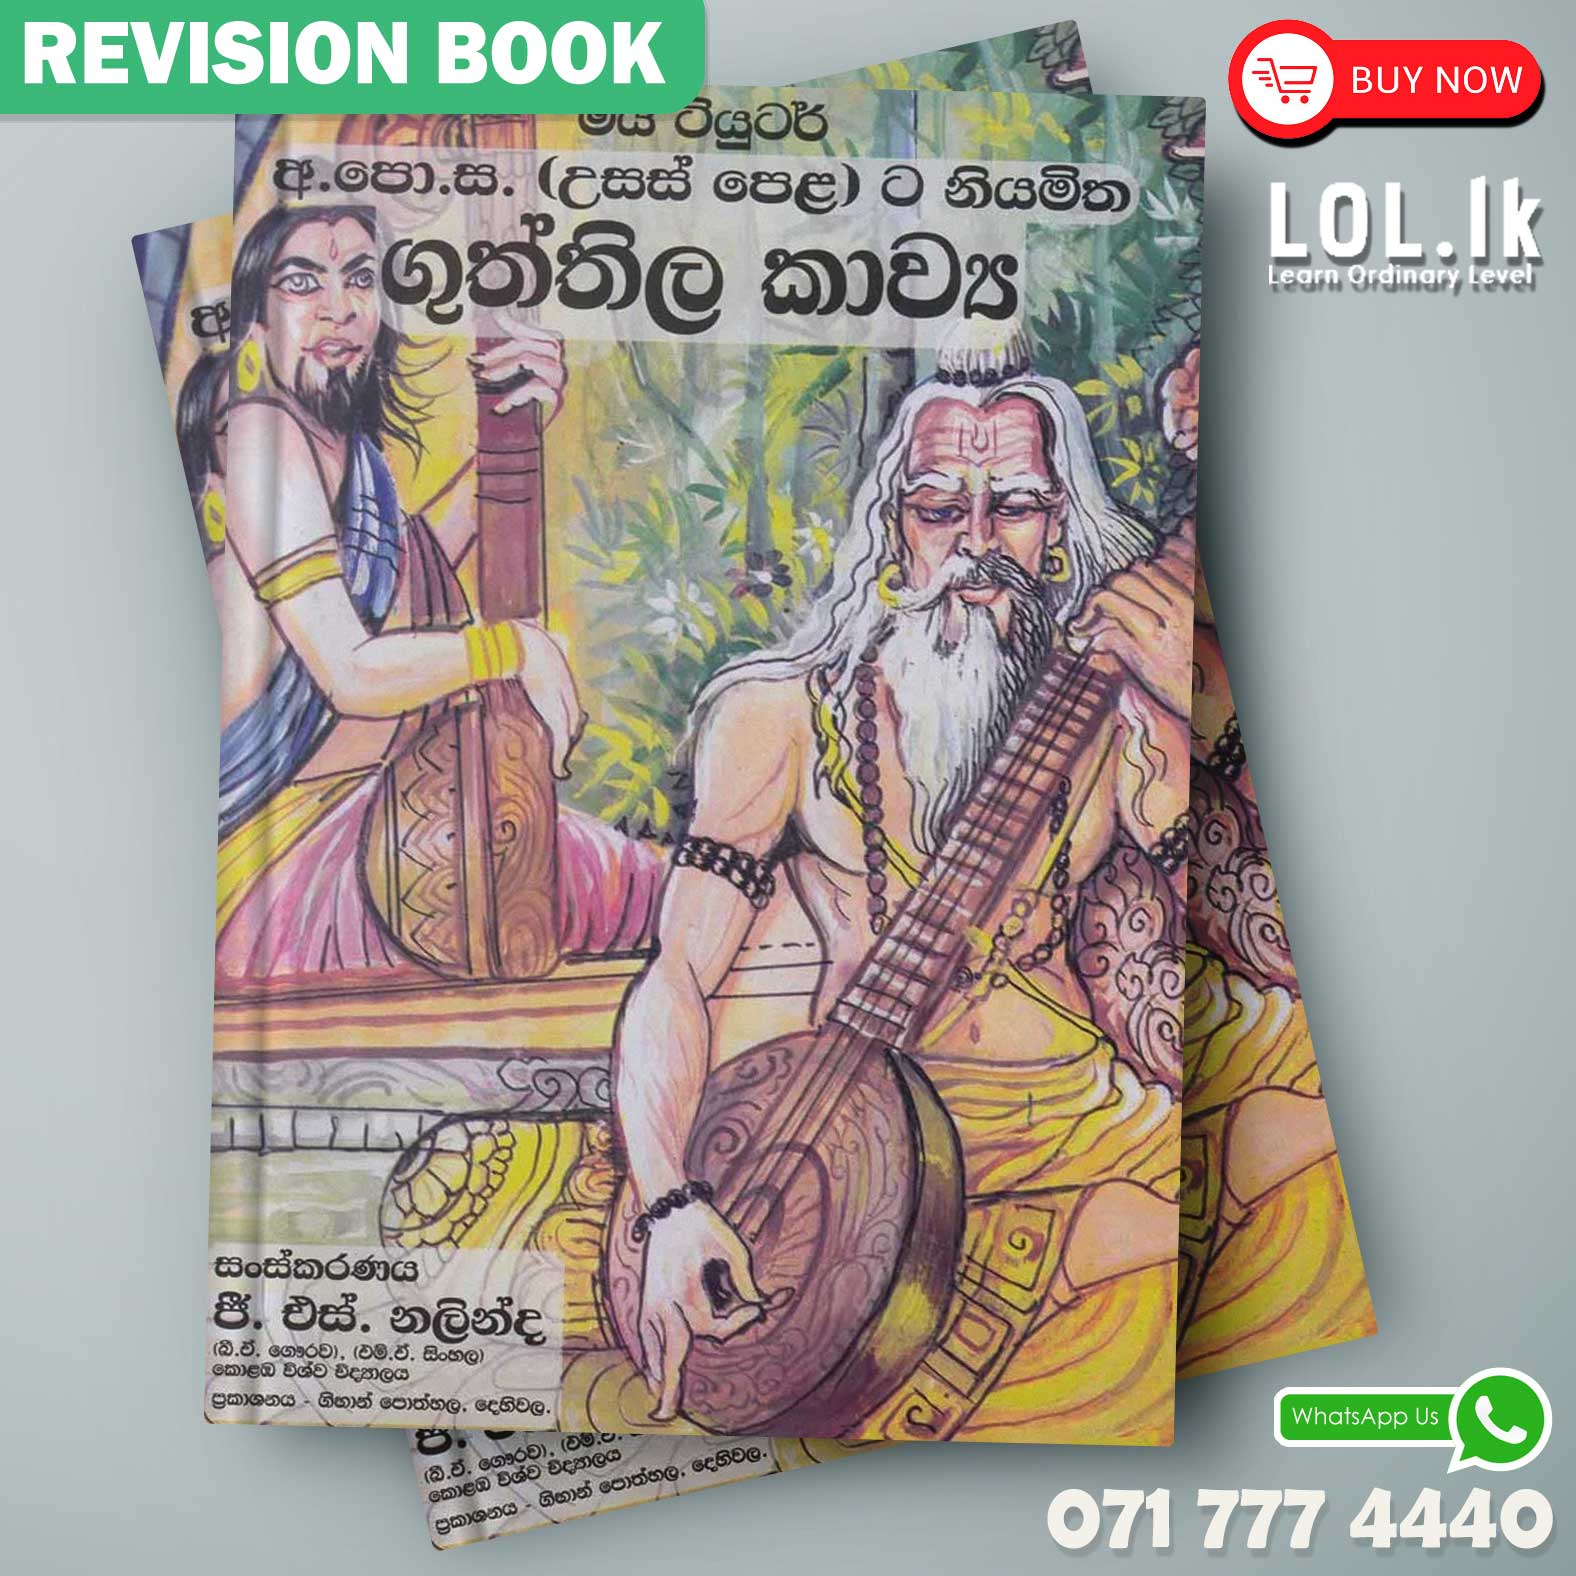 A/L Guththila Kavya Revision Book